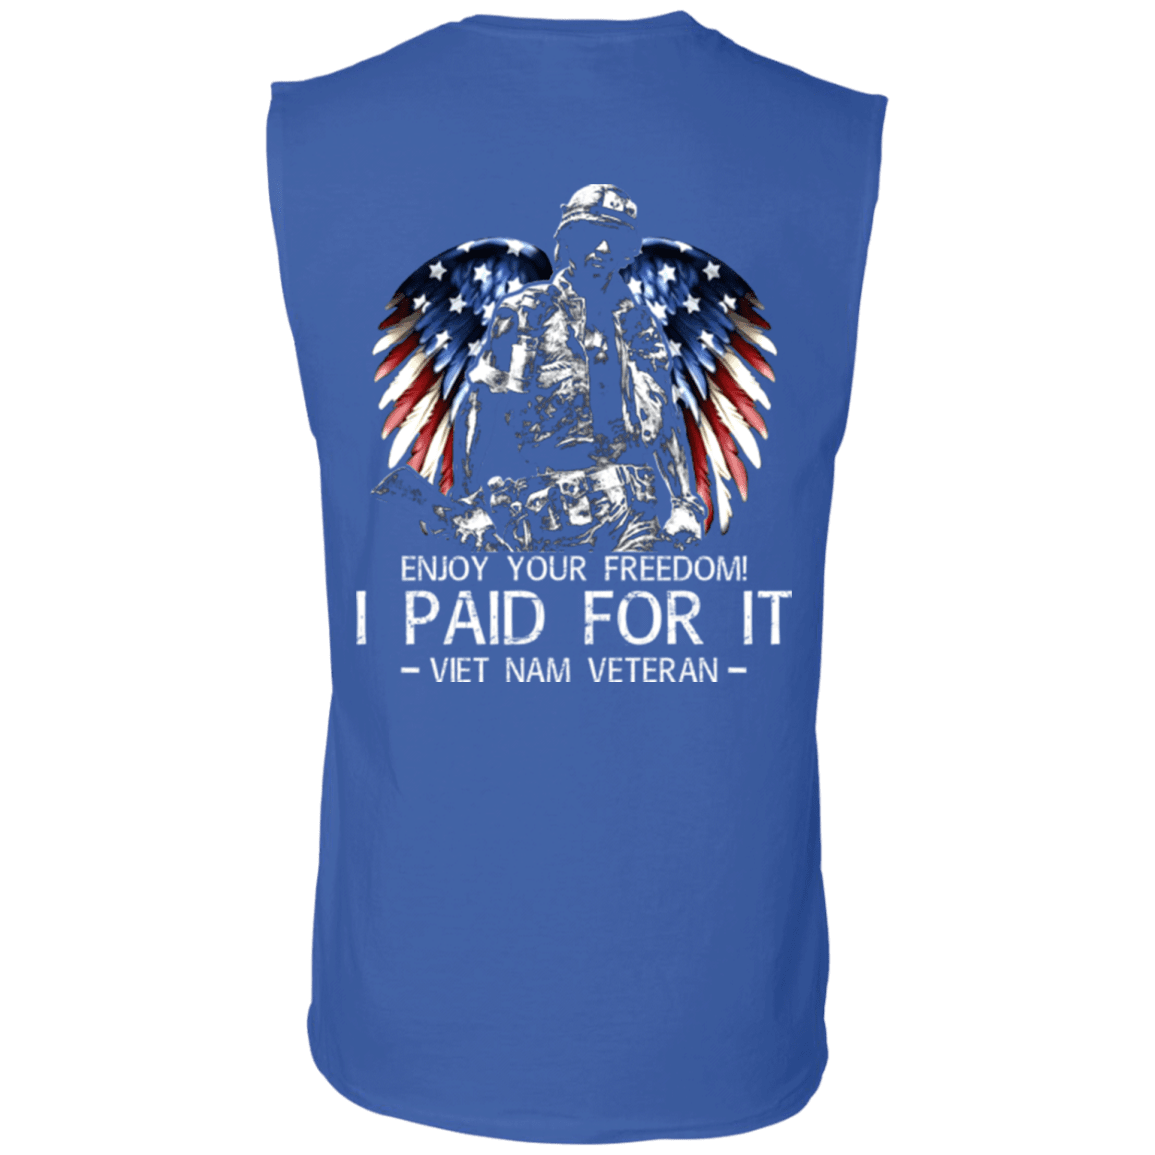 Military T-Shirt "Vietnam Veteran - Enjoy your freedom I paid for it" Men Back-TShirt-General-Veterans Nation